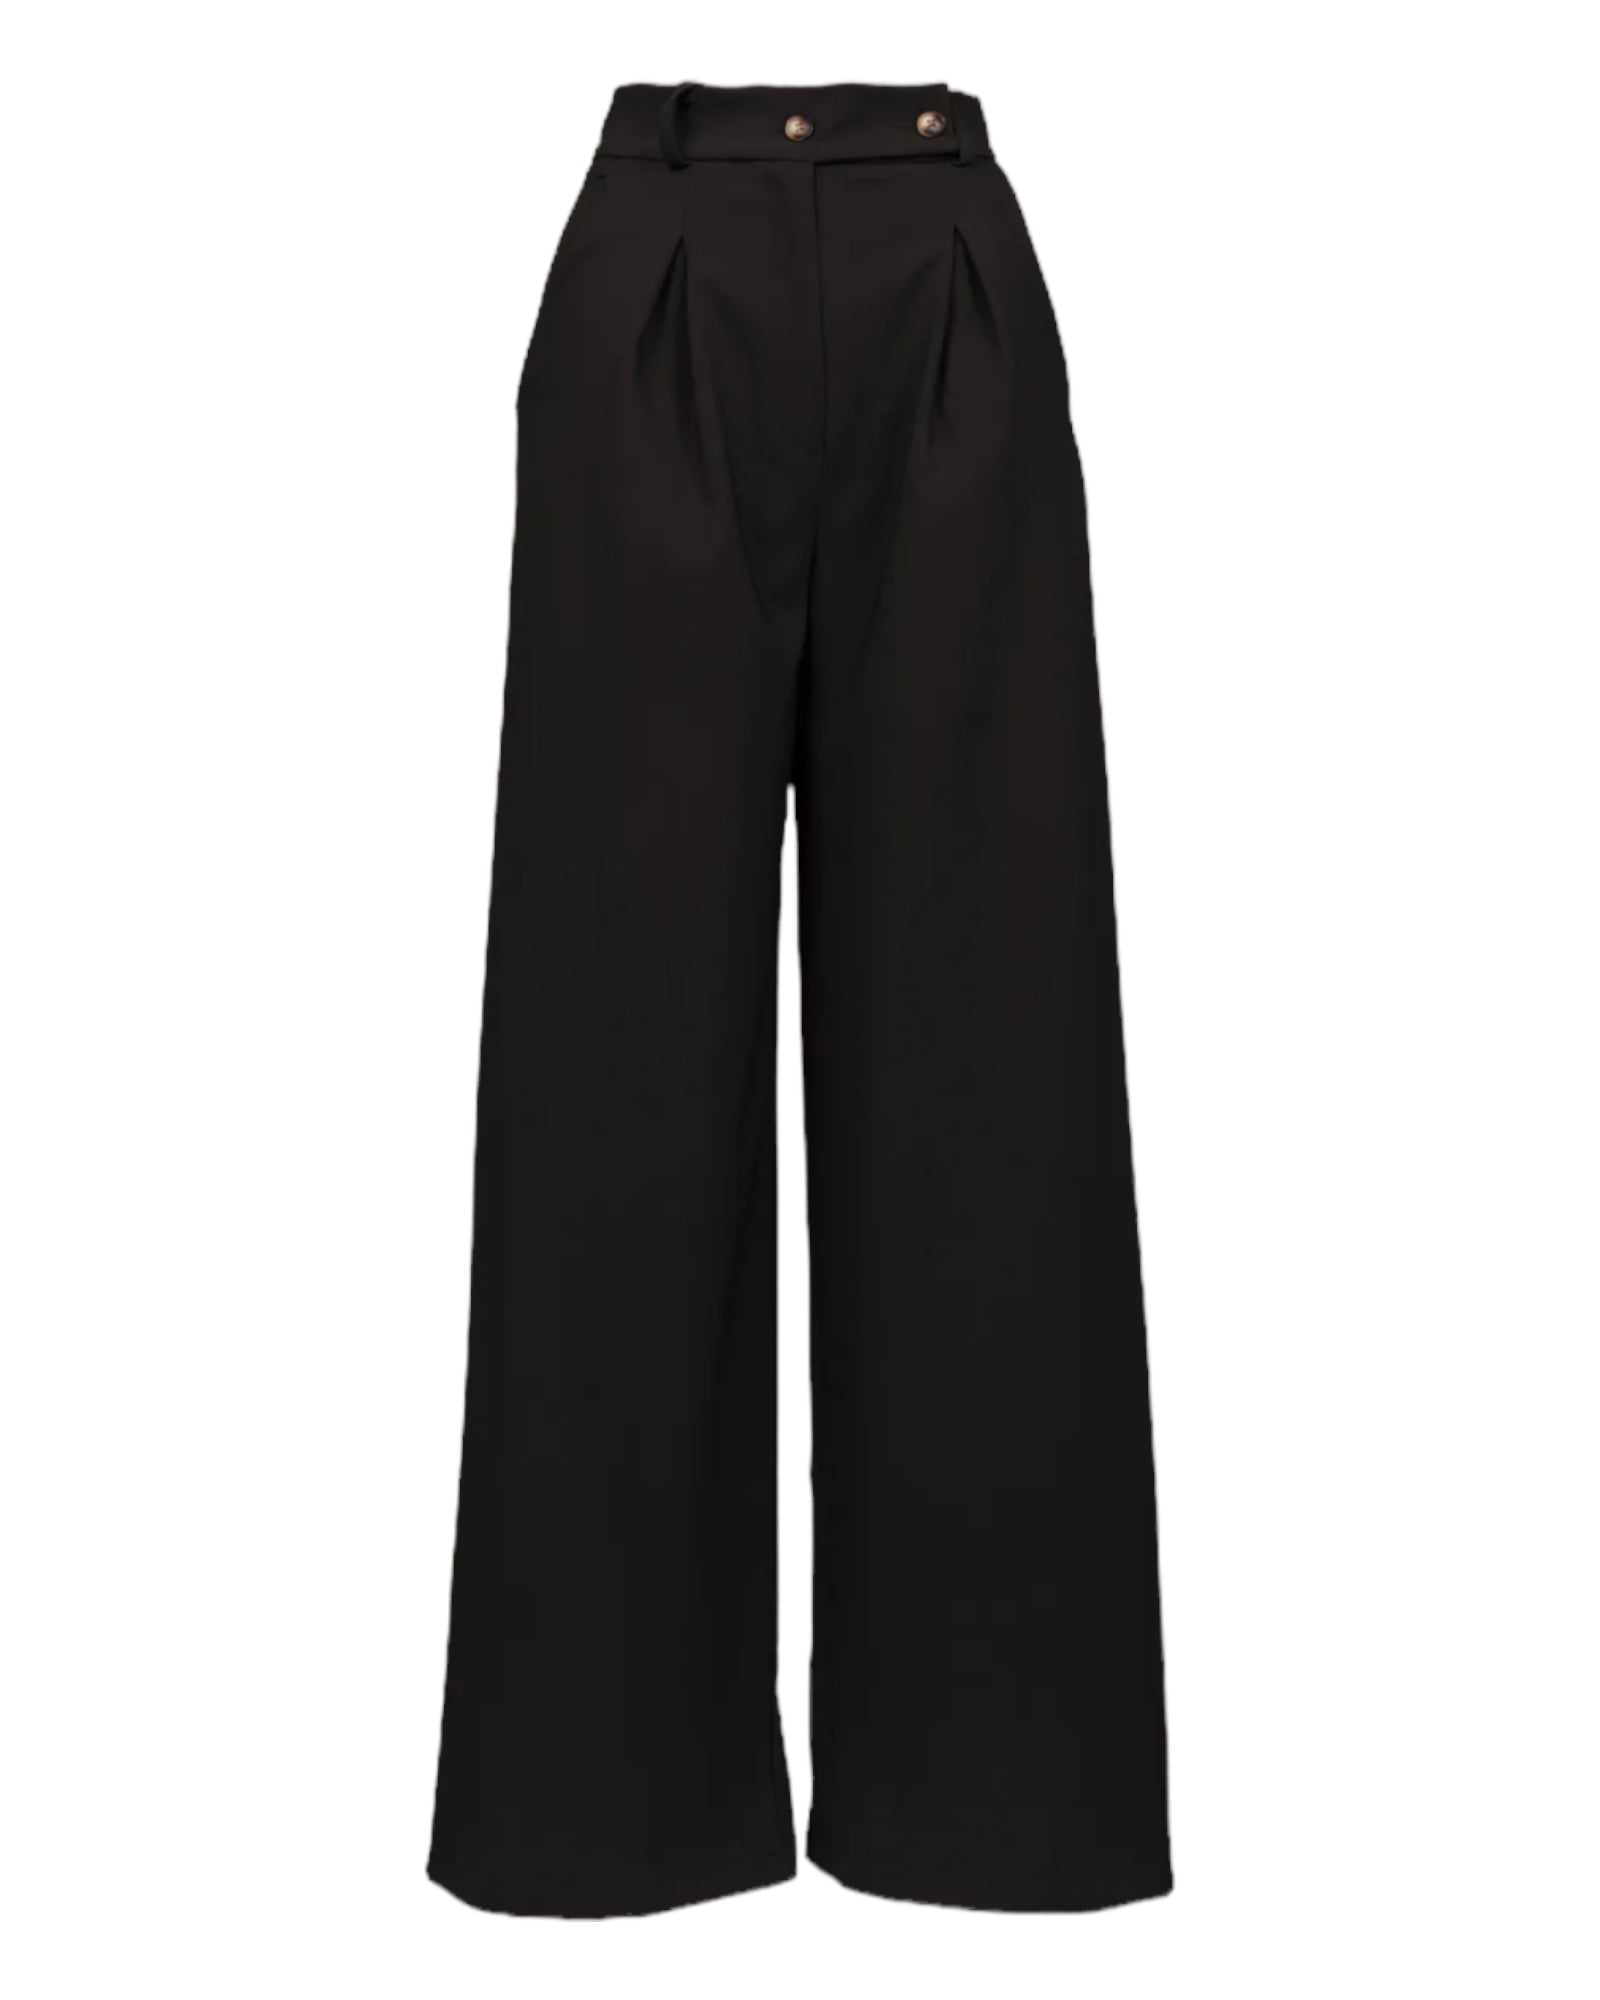 Completo nero blazer + pantaloni palazzo